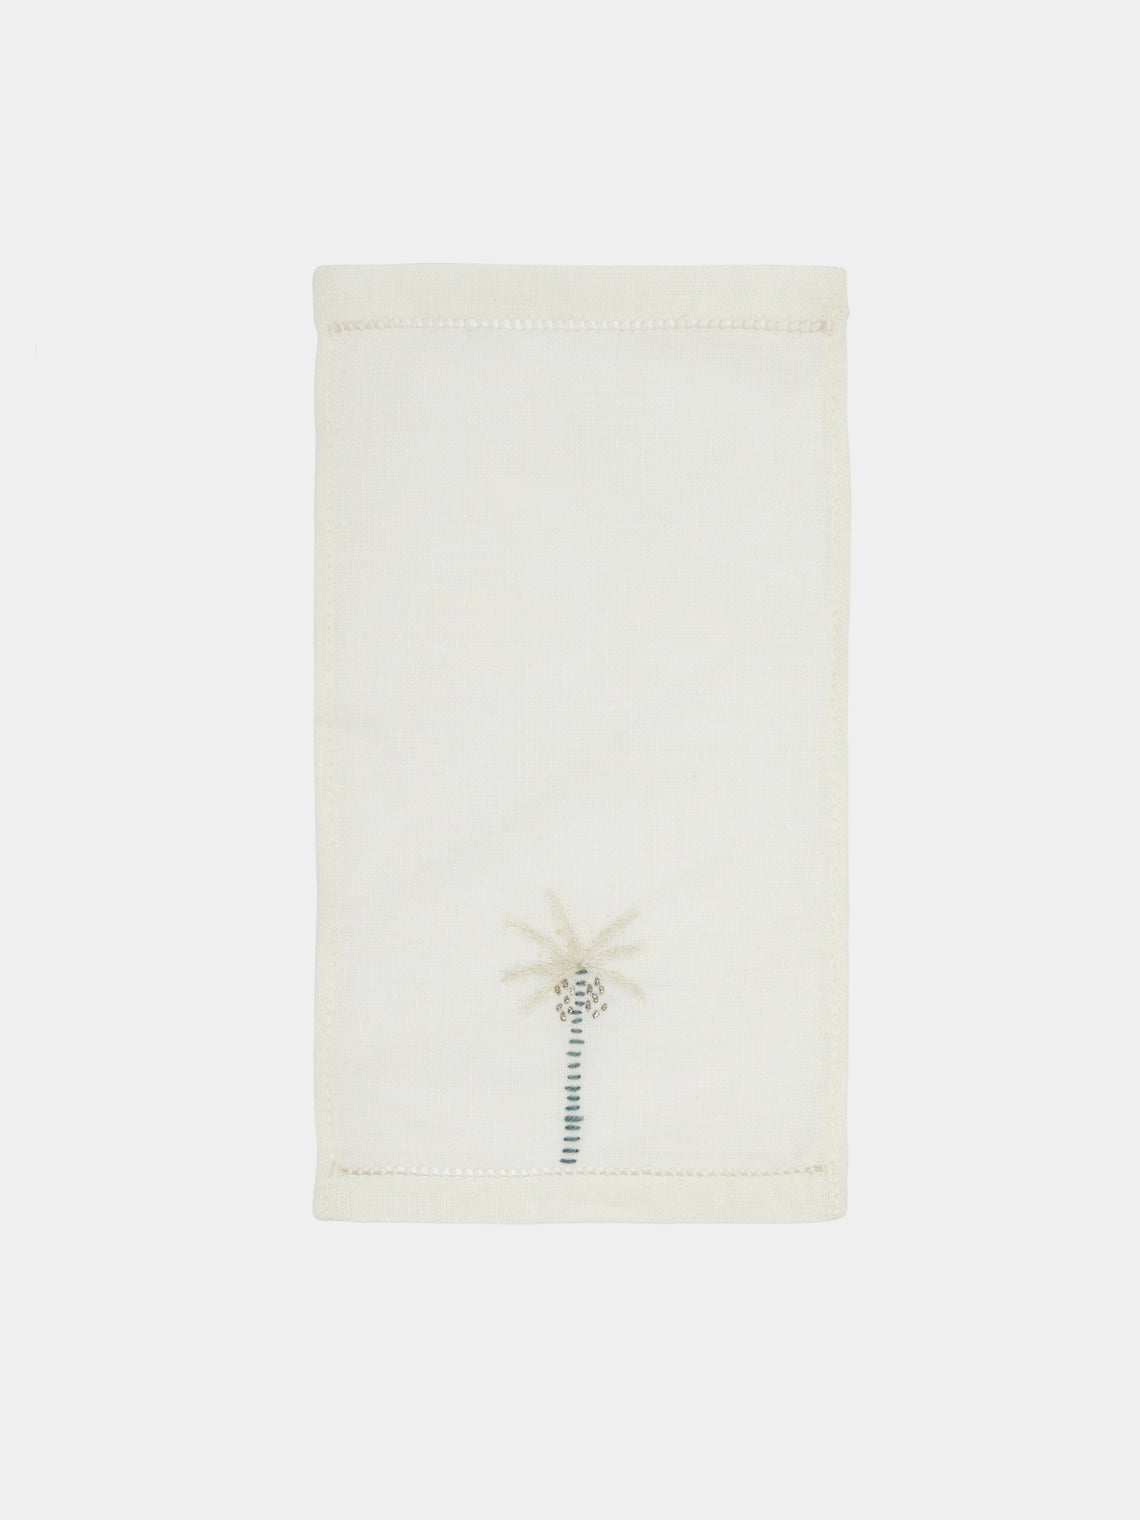 Malaika - Palm Tree Hand-Embroidered Linen Cocktail Napkins (Set of 6) - White - ABASK - 